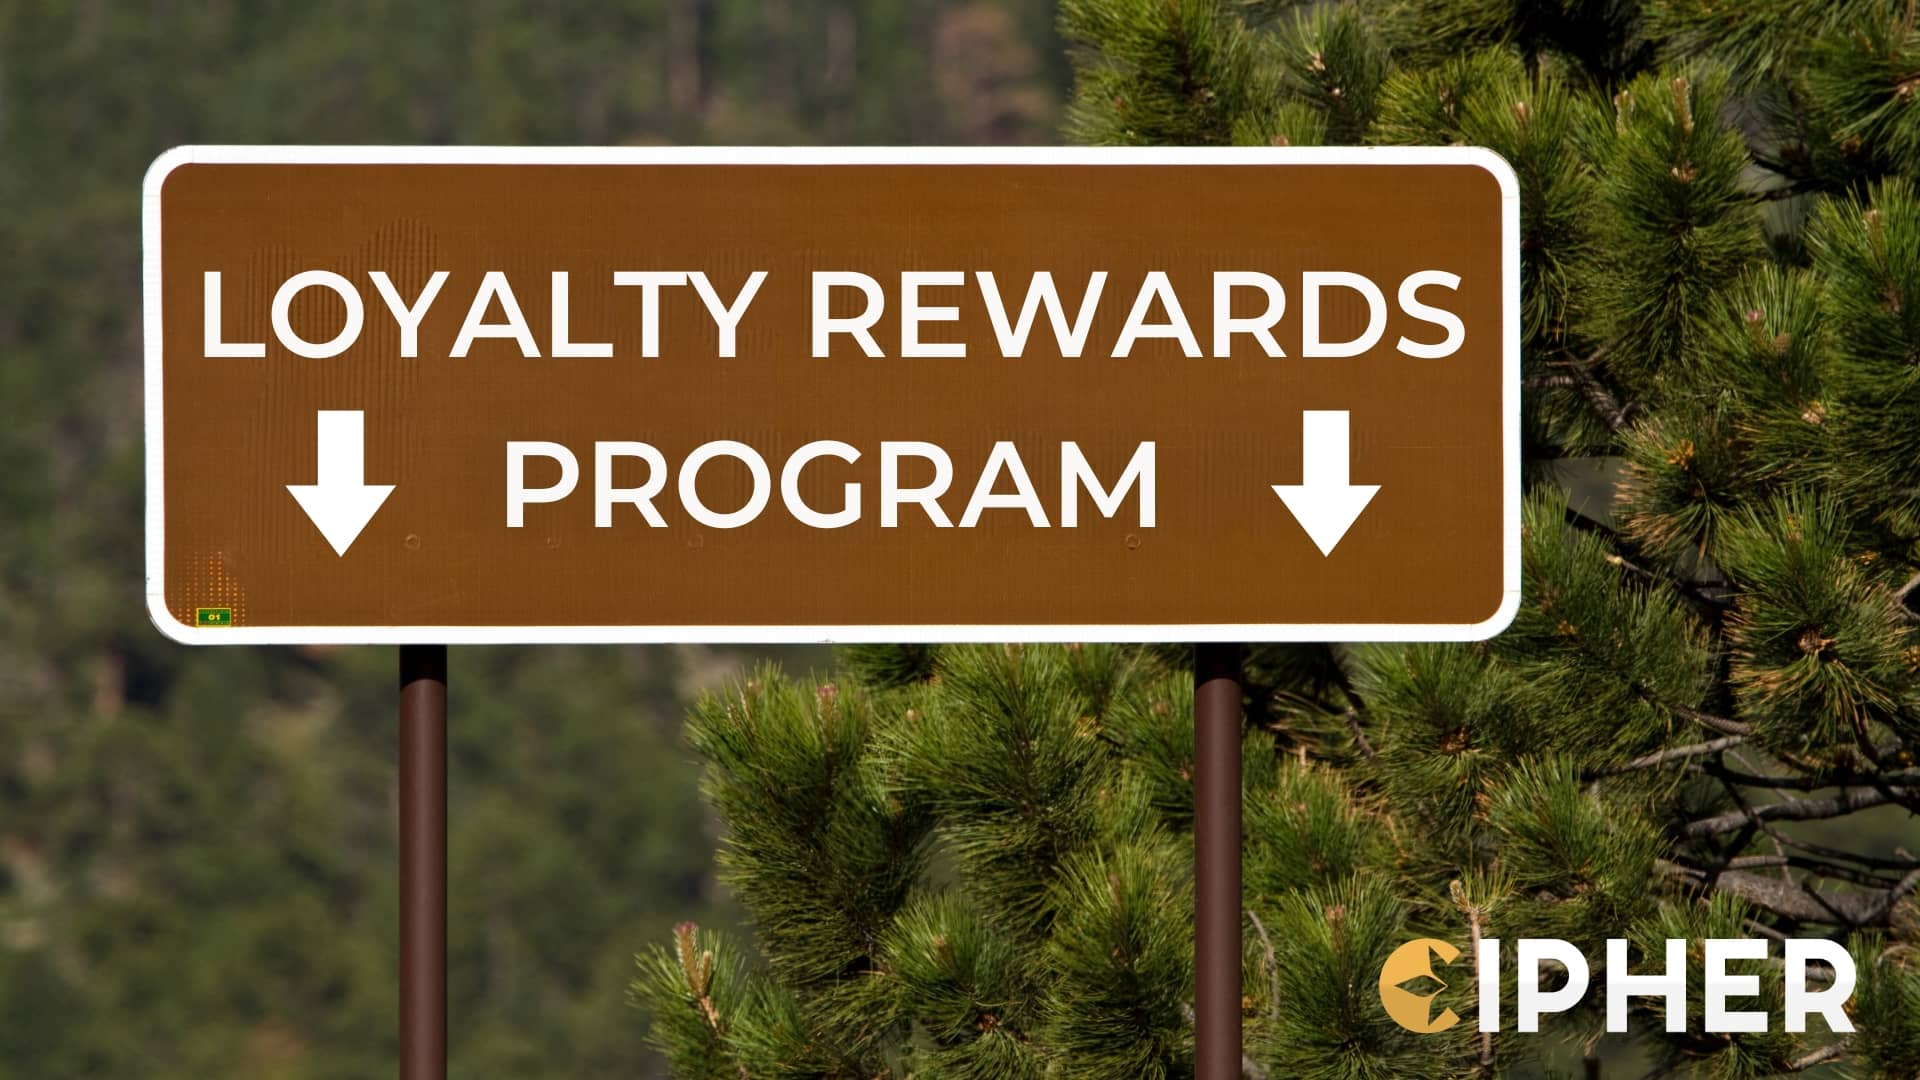 Cipher loyalty rewards program banner